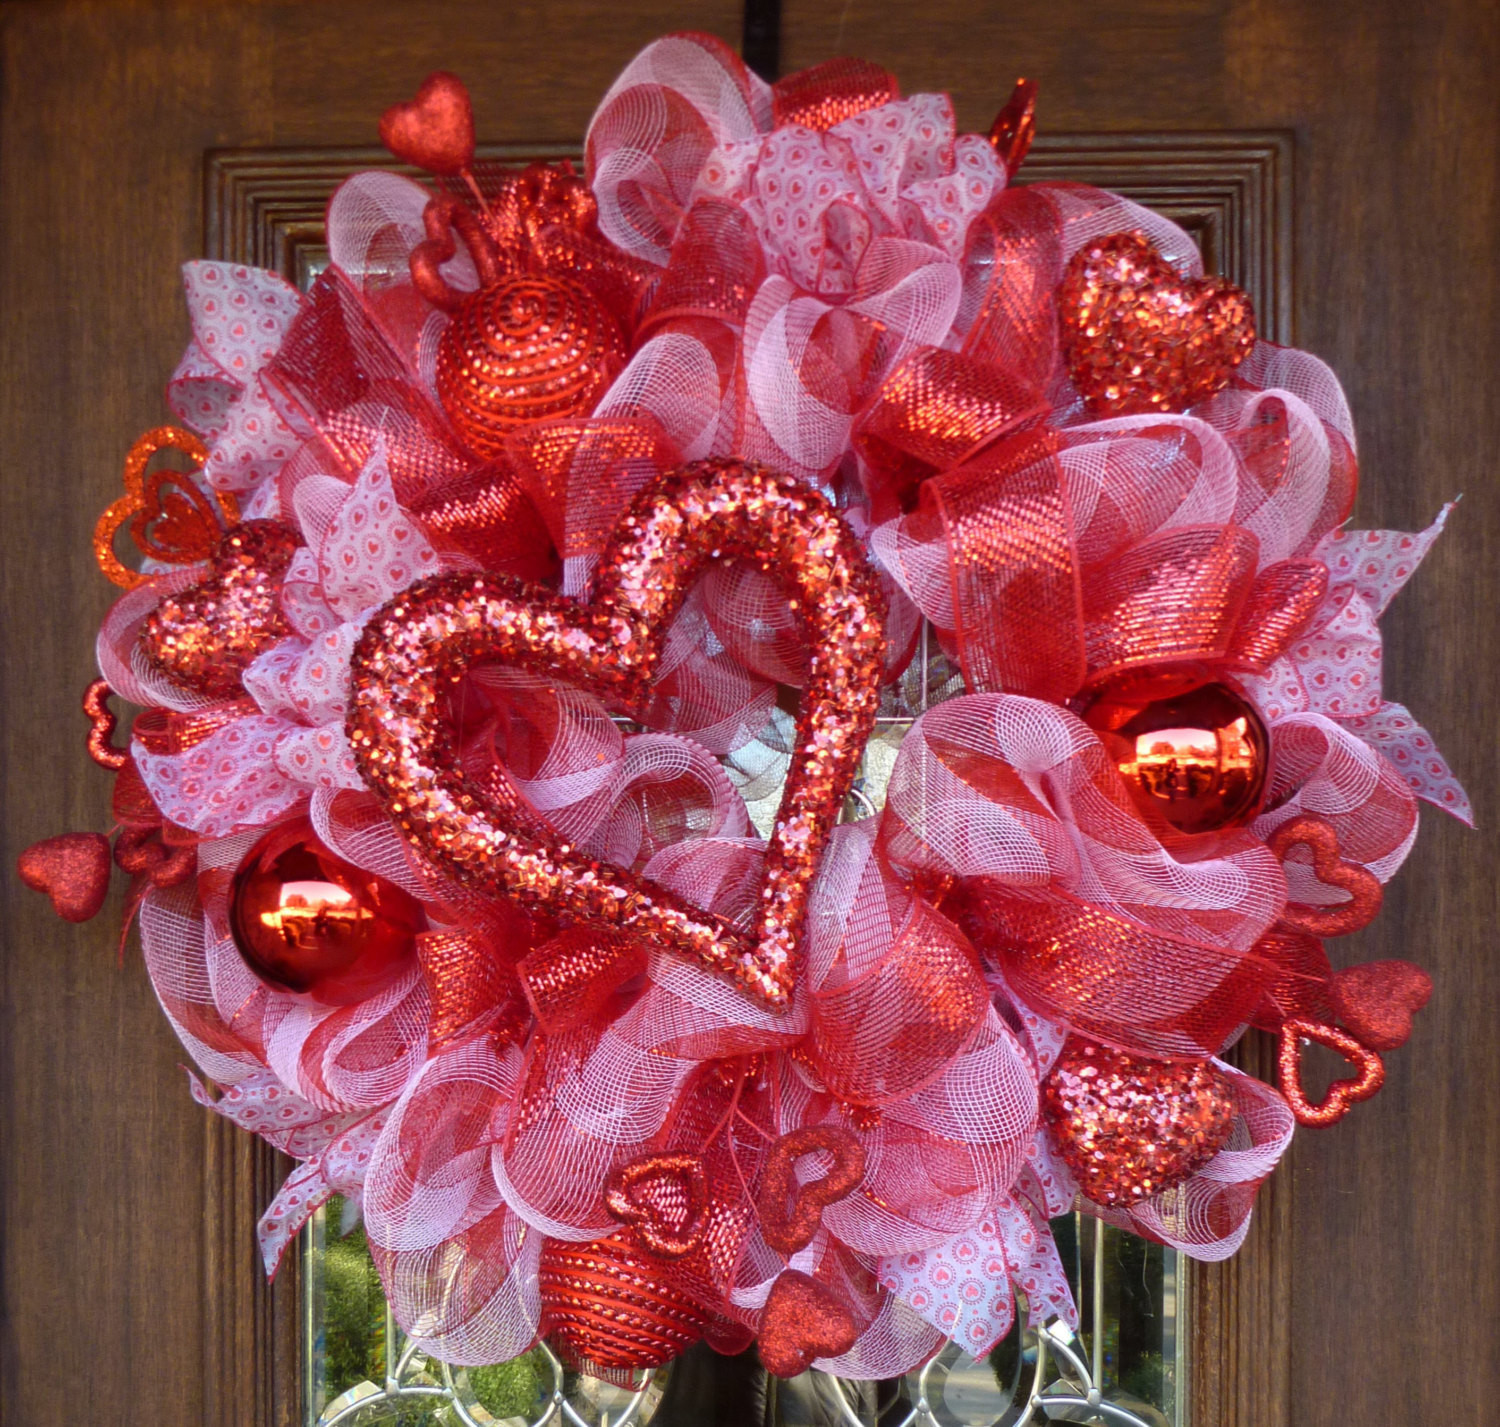 Valentines Day Wreath Ideas
 Deco Mesh VALENTINE S DAY Wreath with HEARTS